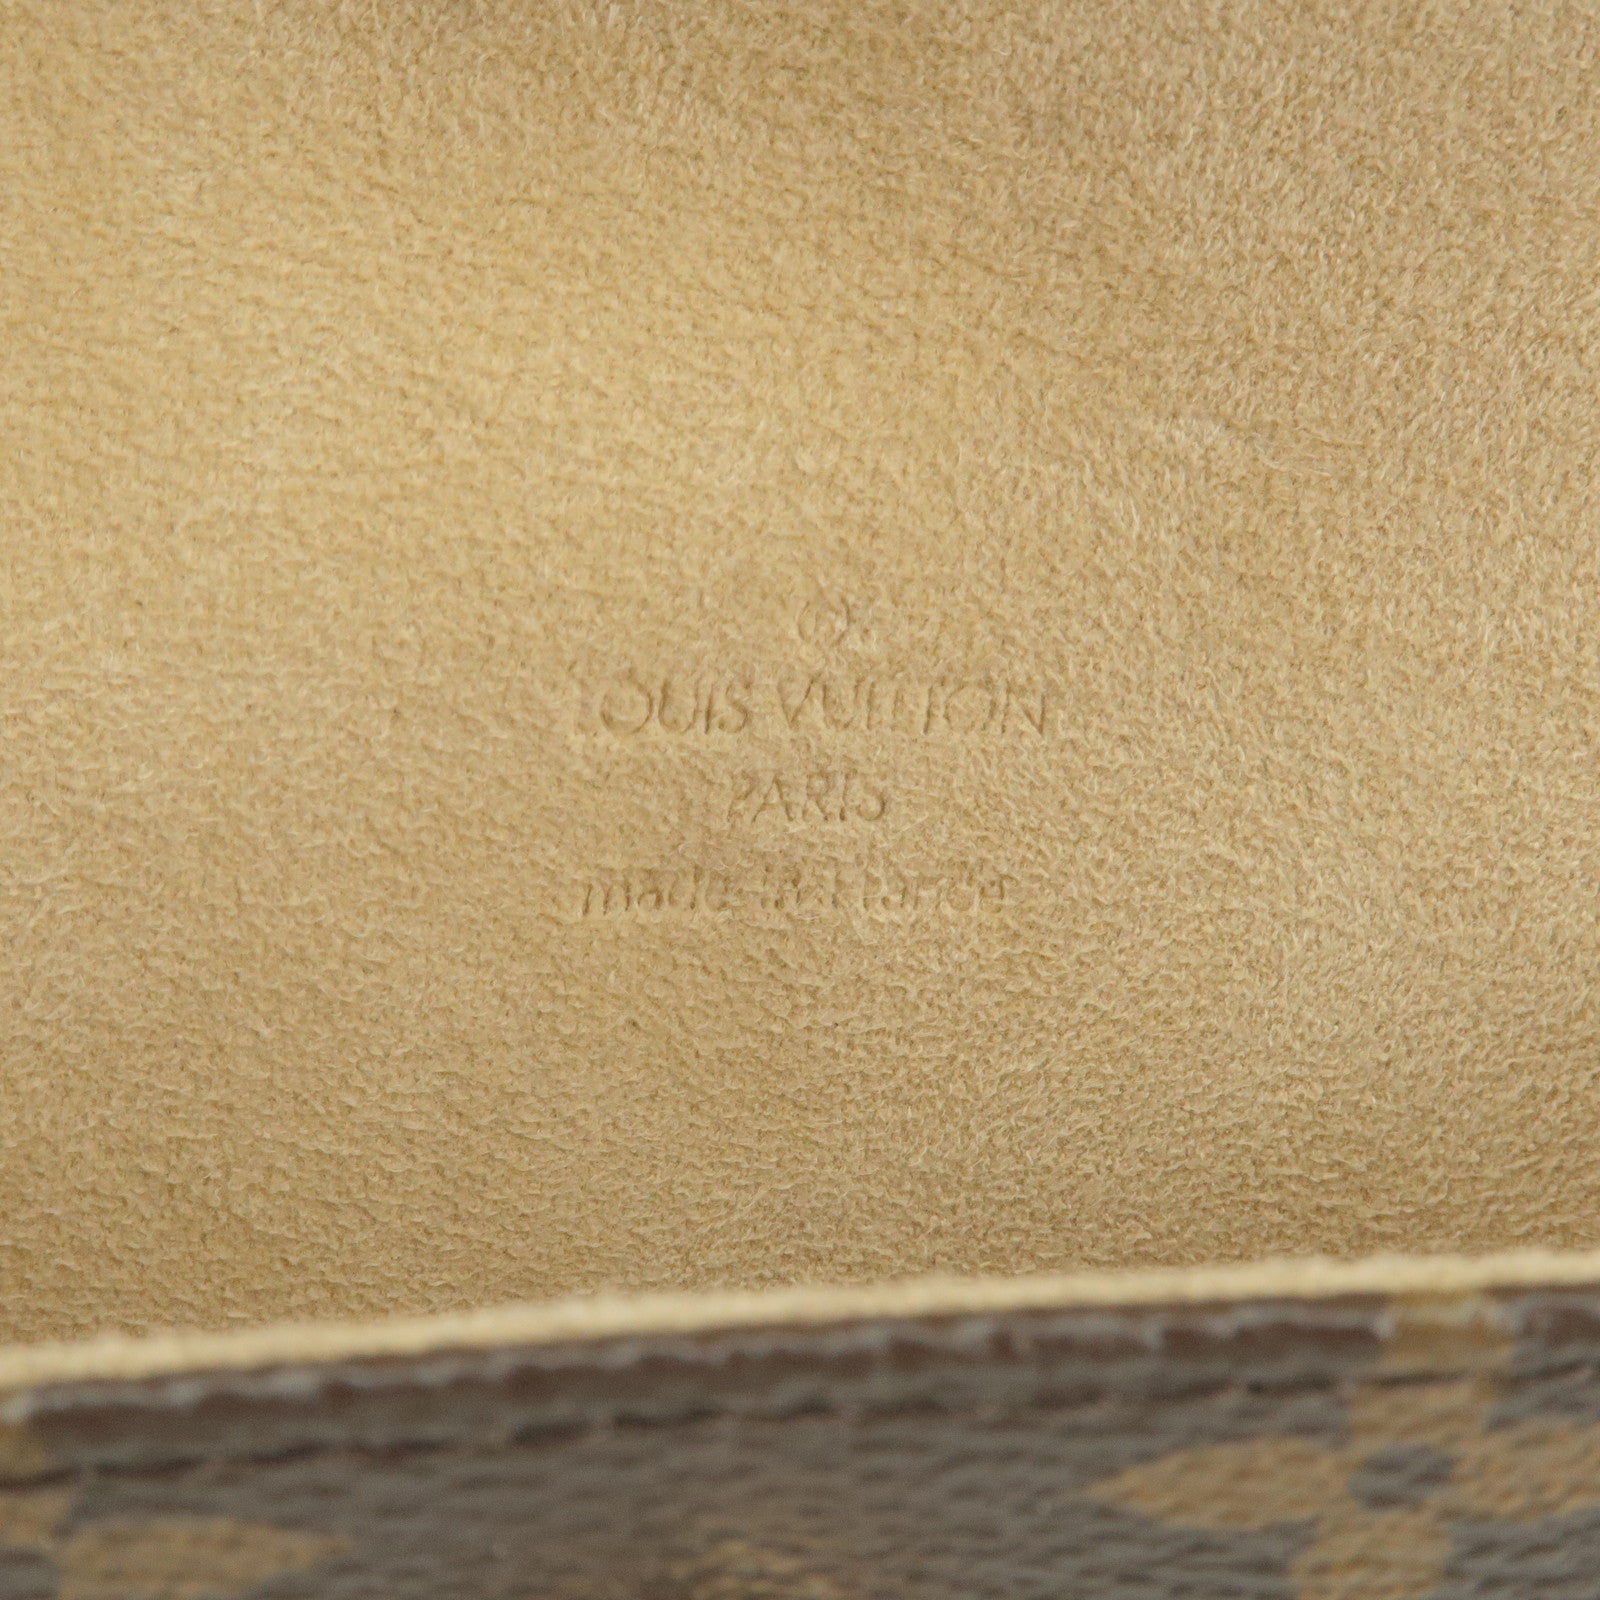 M51855 – Louis Vuitton 2006 pre - Vuitton - Florentine - Louis - Monogram -  Waist - Bag - XS - Кеды на танкетке louis vuitton - Pochette - owned  Ceinture Pochette belt bag